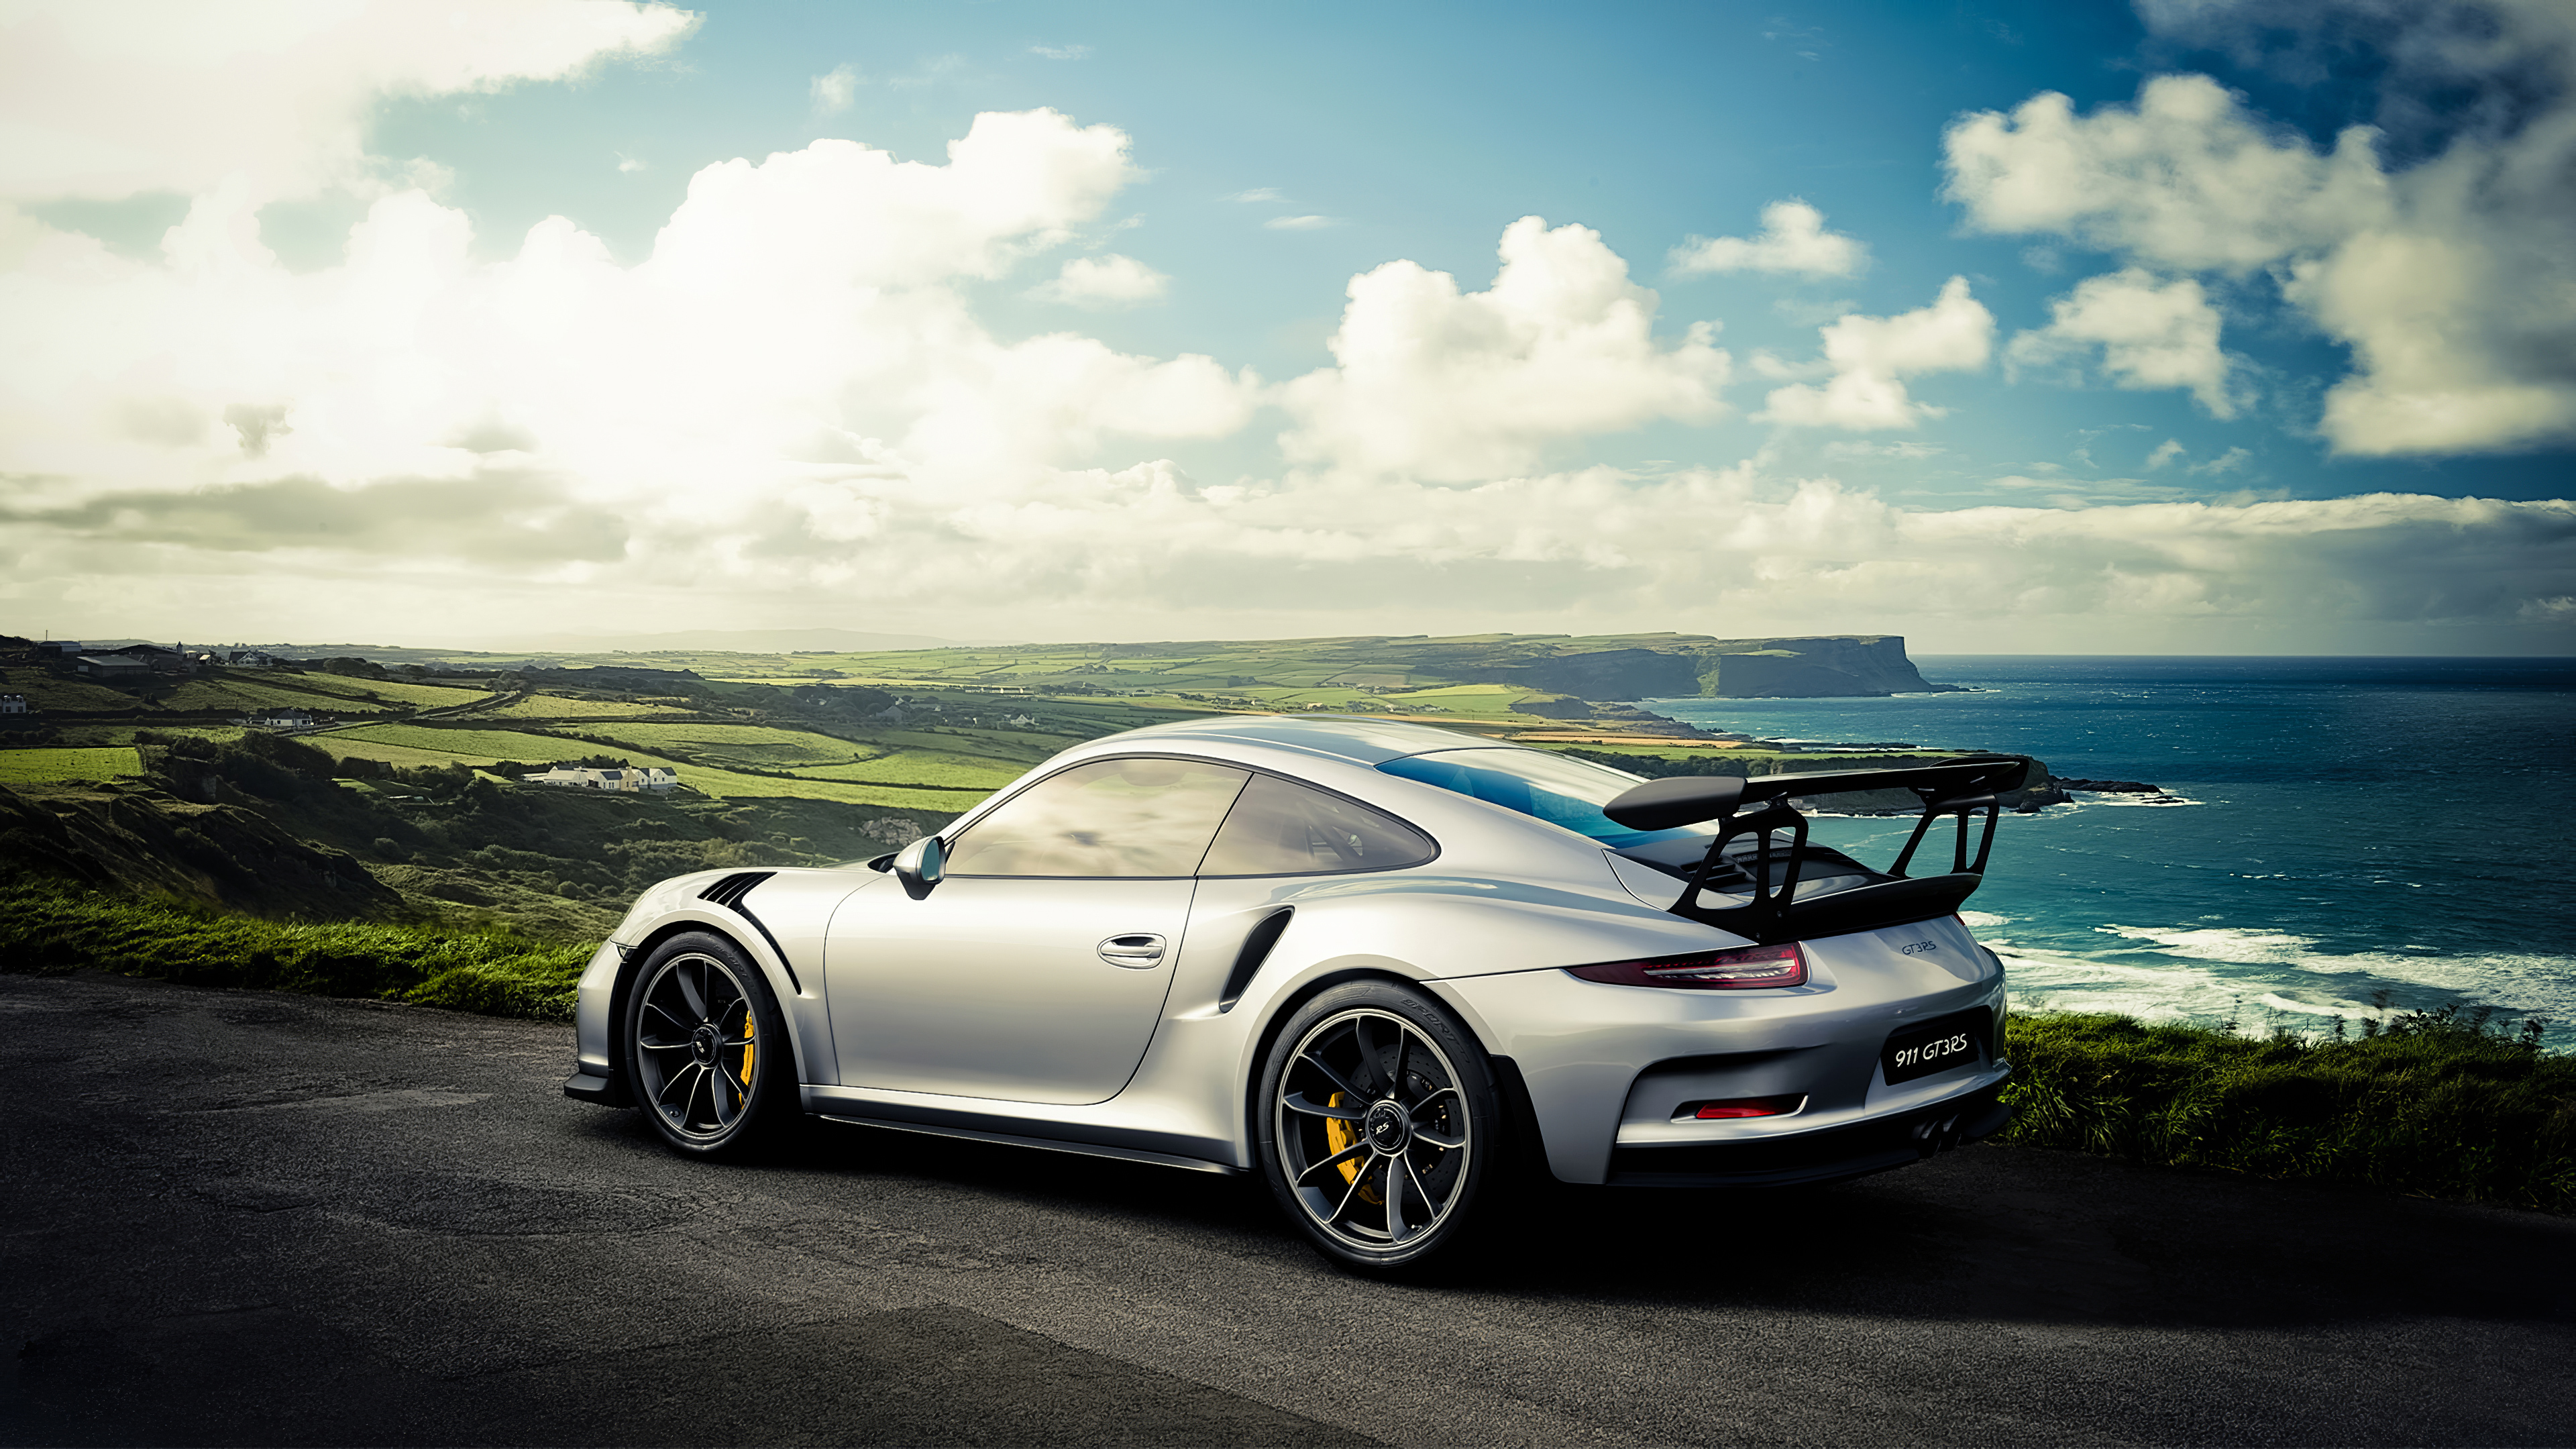 Porsche 911 Gt3 Rs 4k 5k Wallpaper Hd Car Wallpapers Id 14584 | Images ...